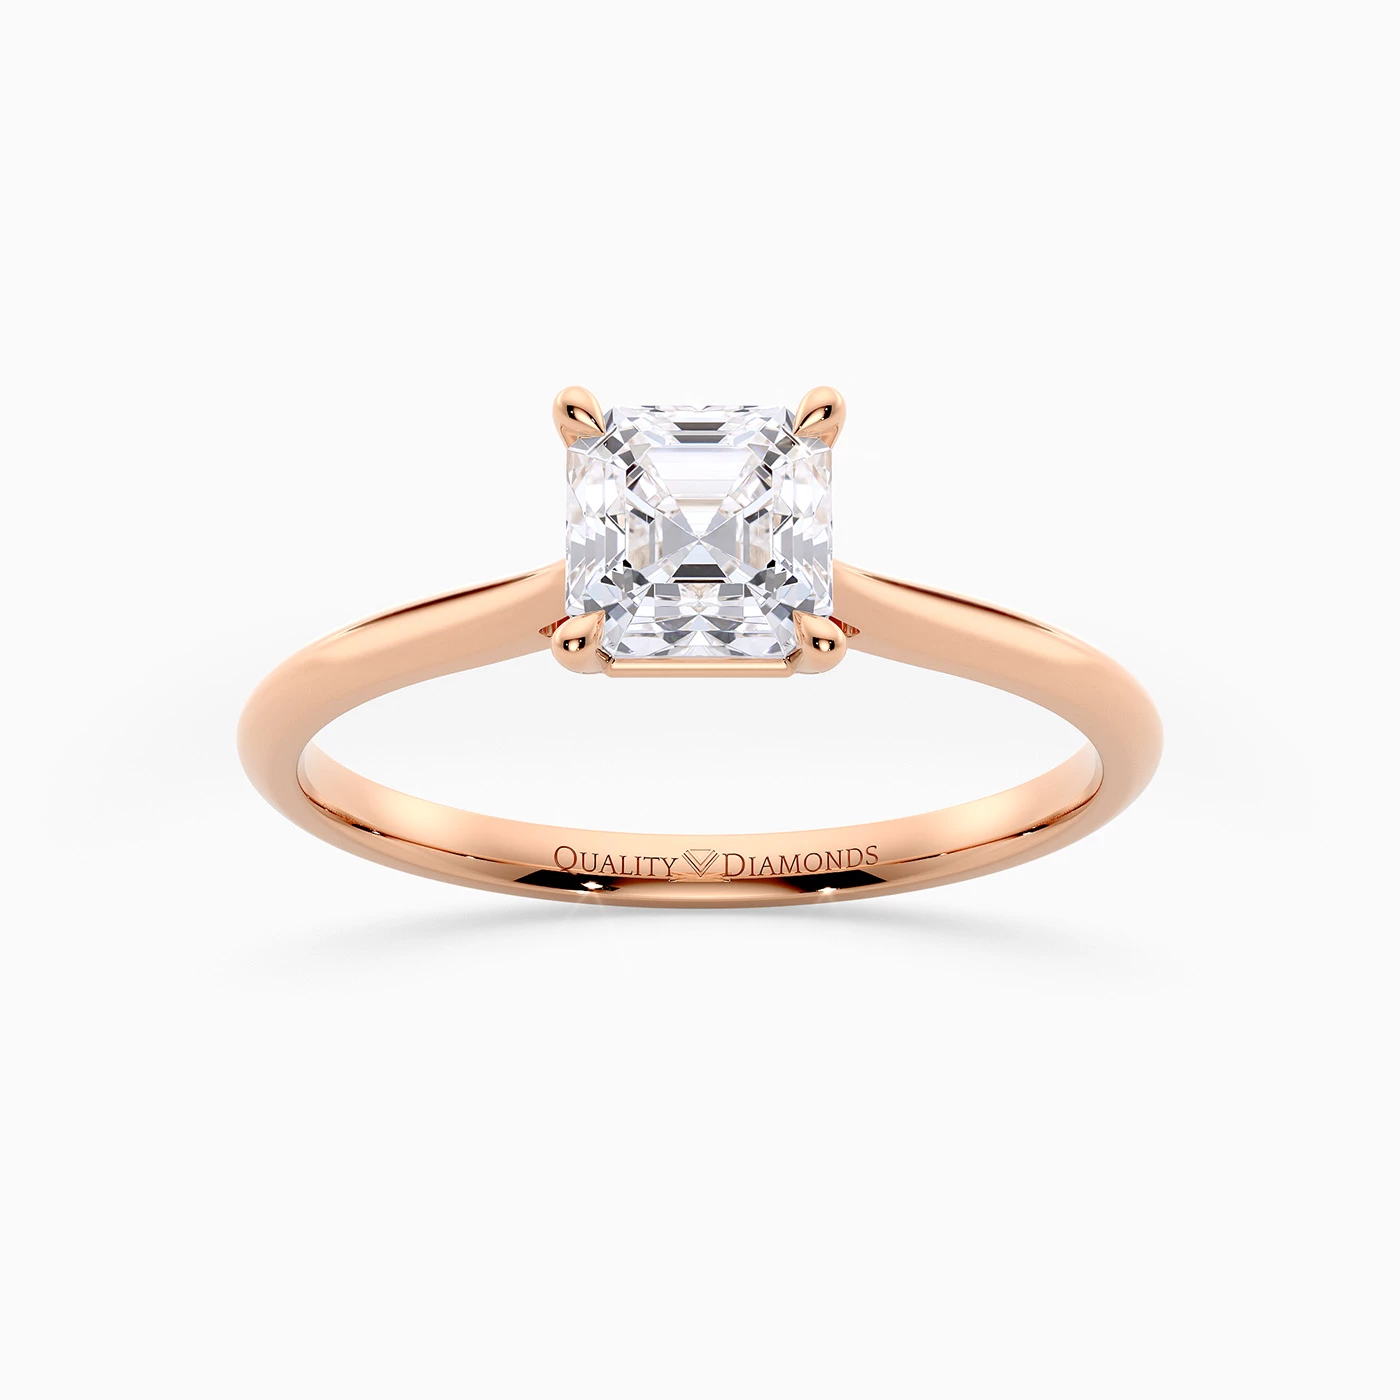 Asscher Carys Diamond Ring in 18K Rose Gold